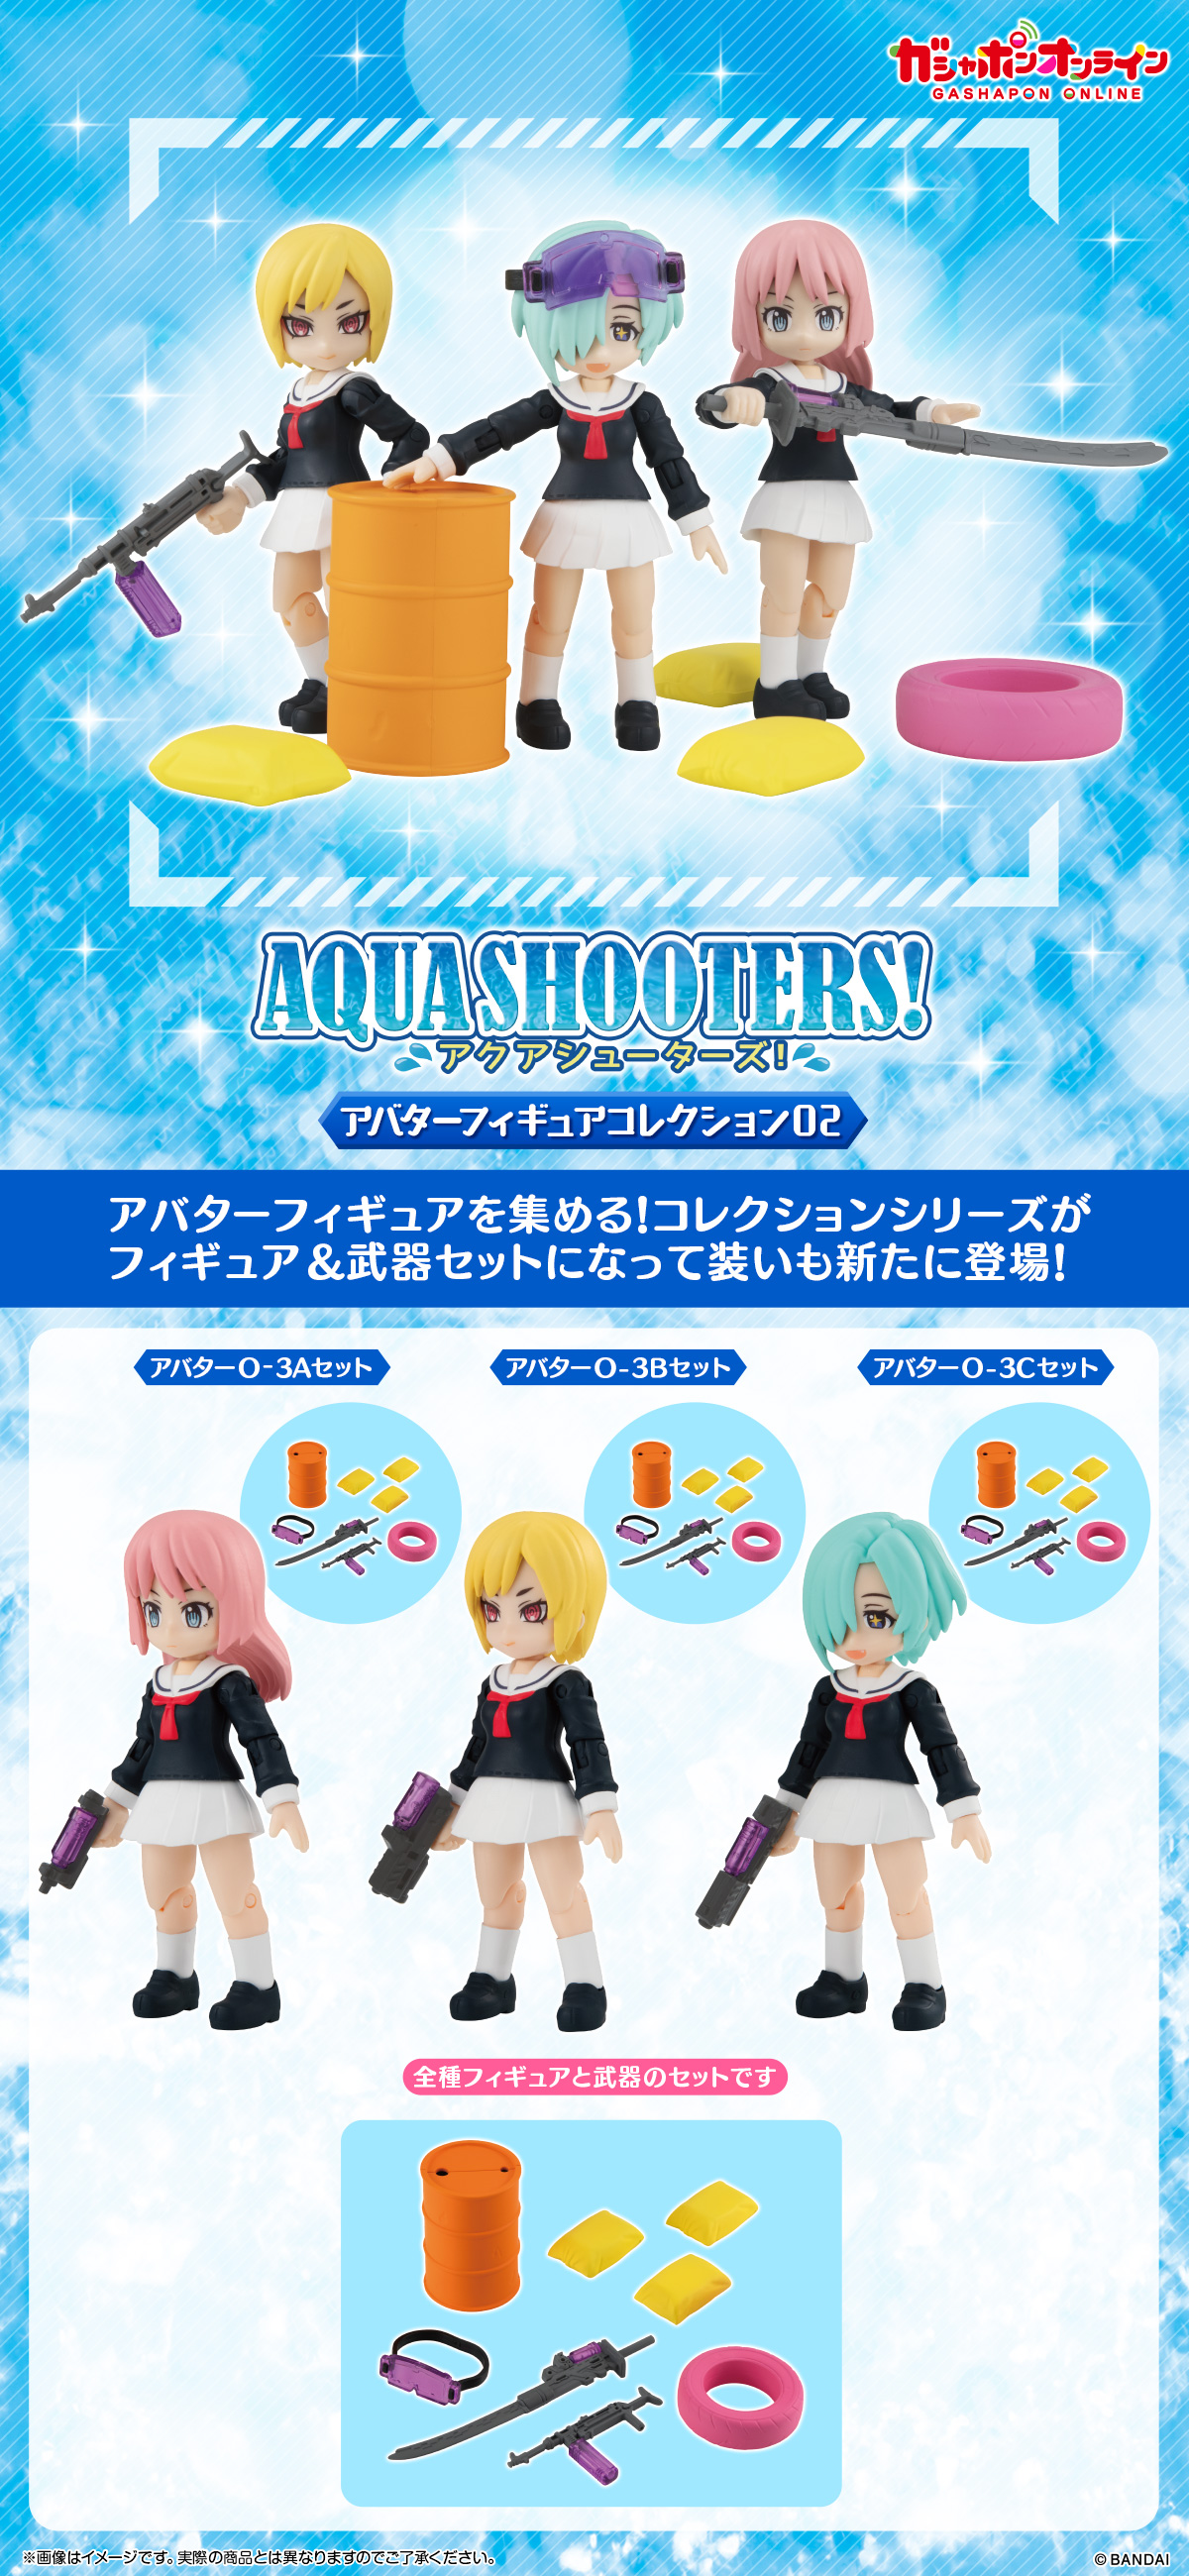 AQUA SHOOTERS! アバターフィギュアコレクション02 | ナムコパークス ...